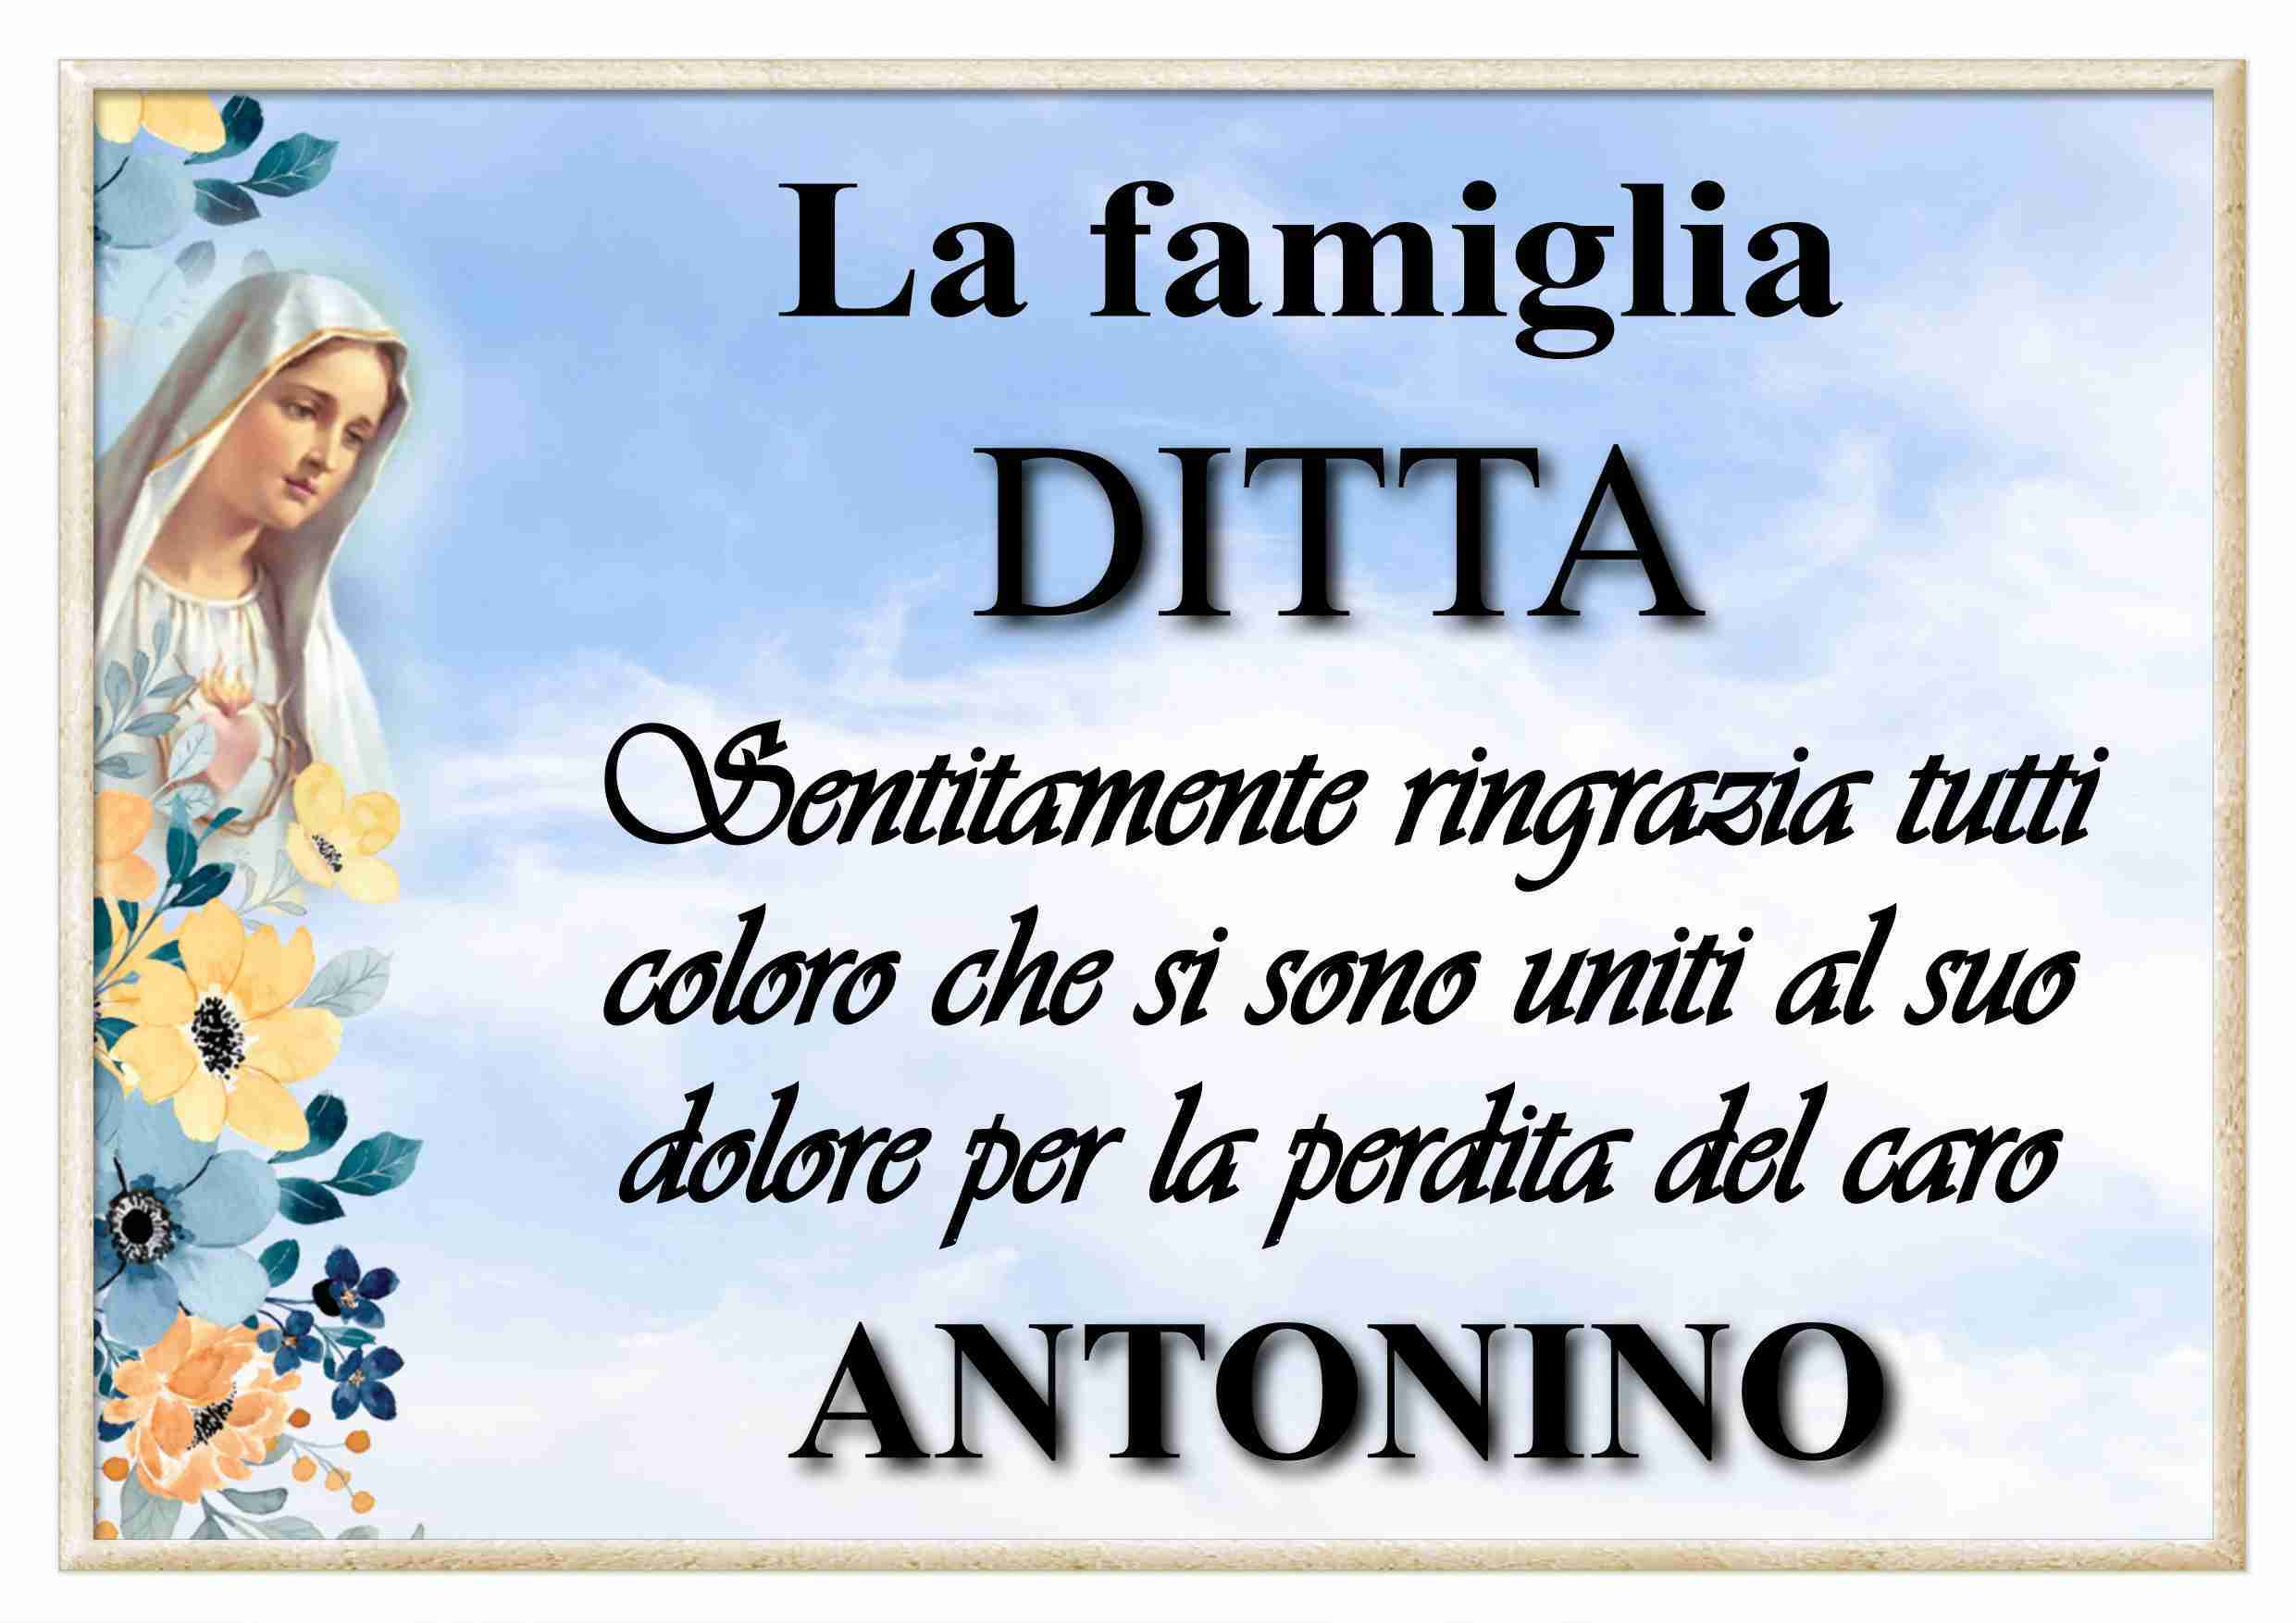 Antonino Ditta